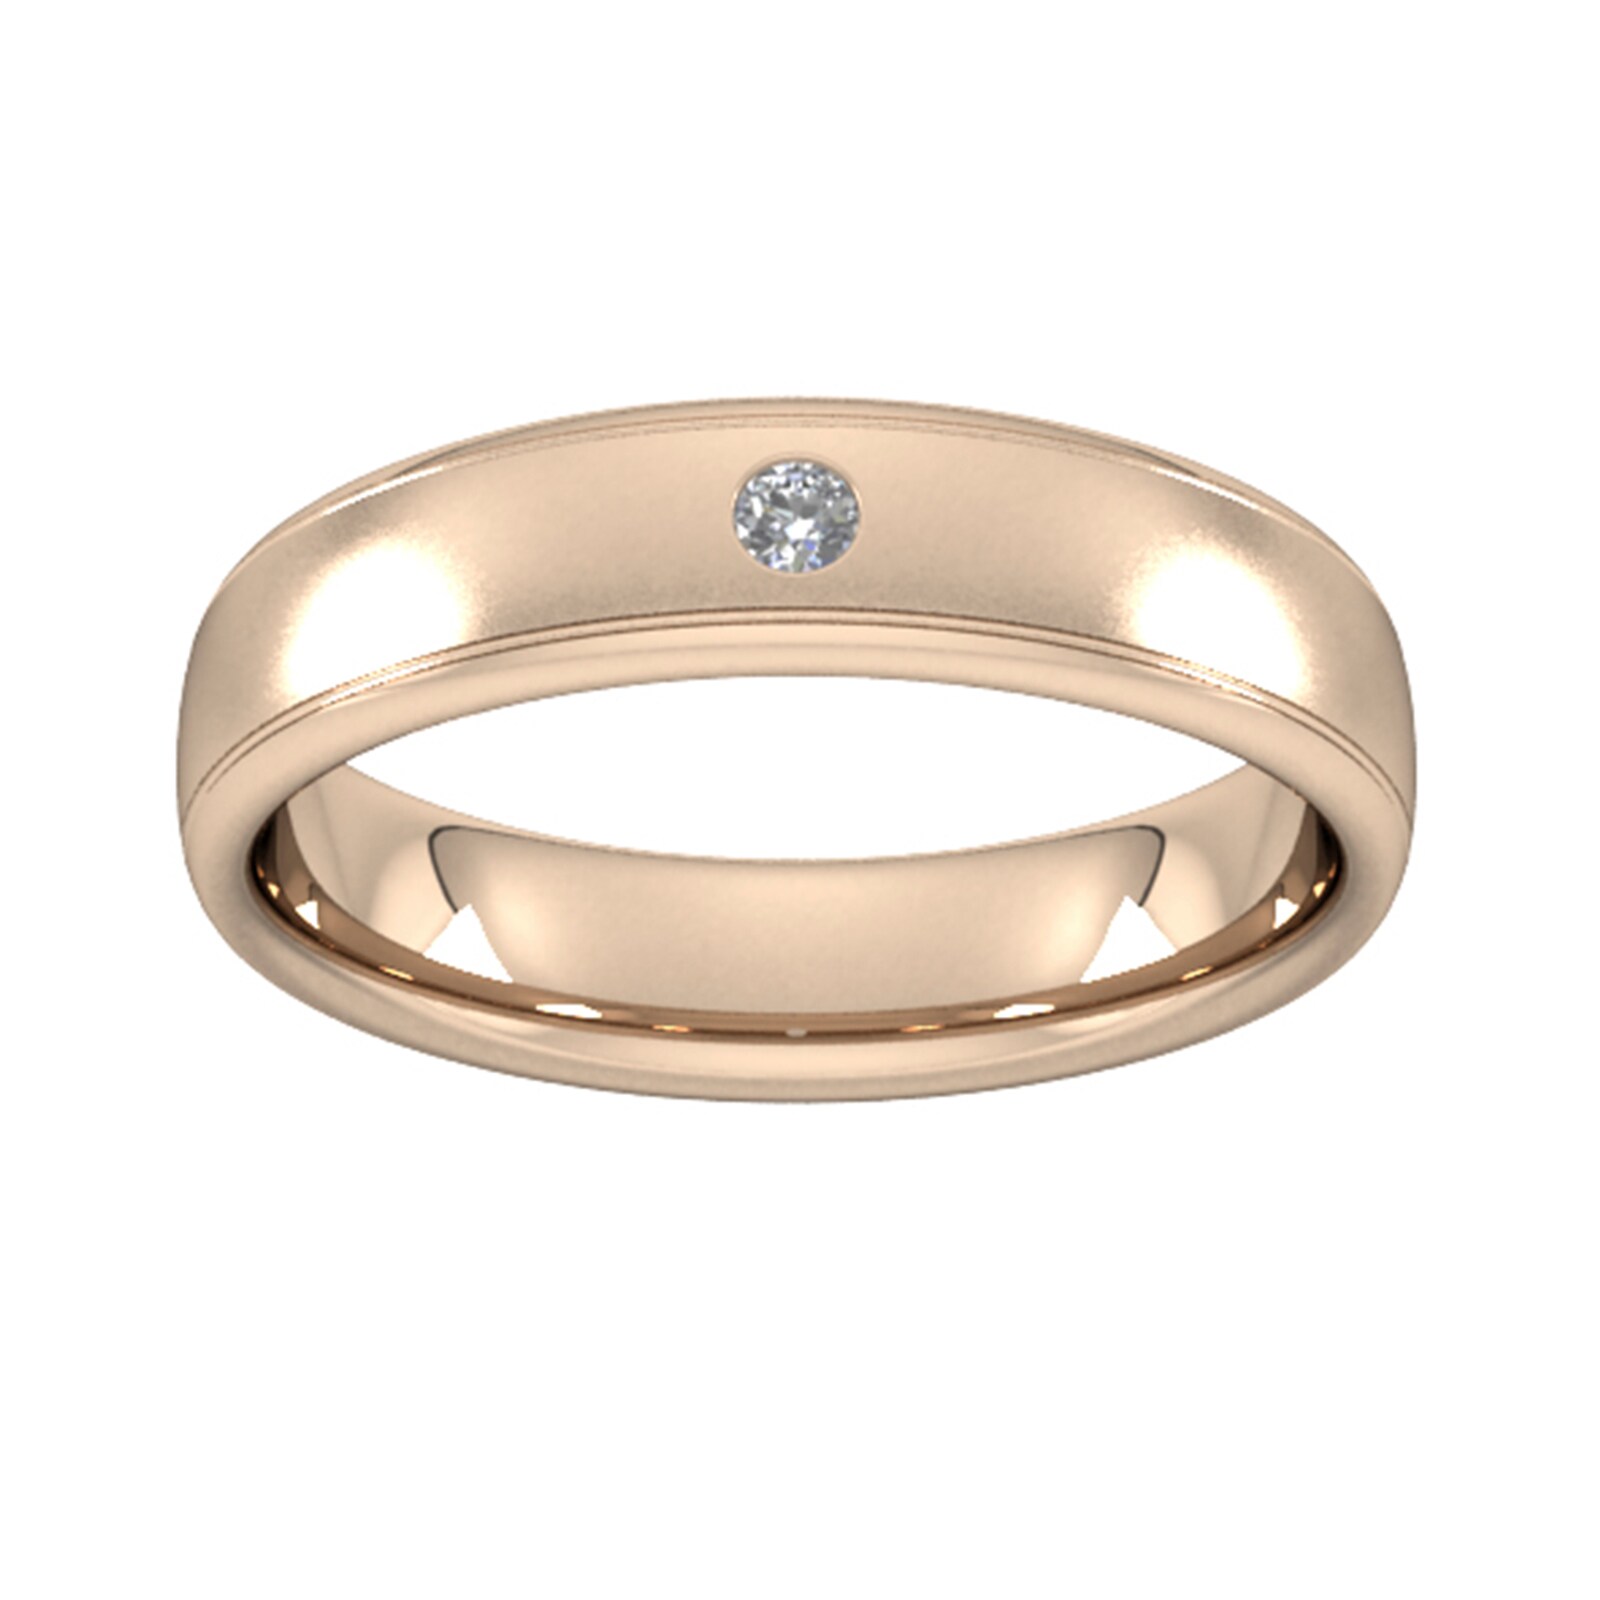 5mm Brilliant Cut Diamond Set Wedding Ring In 9 Carat Rose Gold - Ring Size S